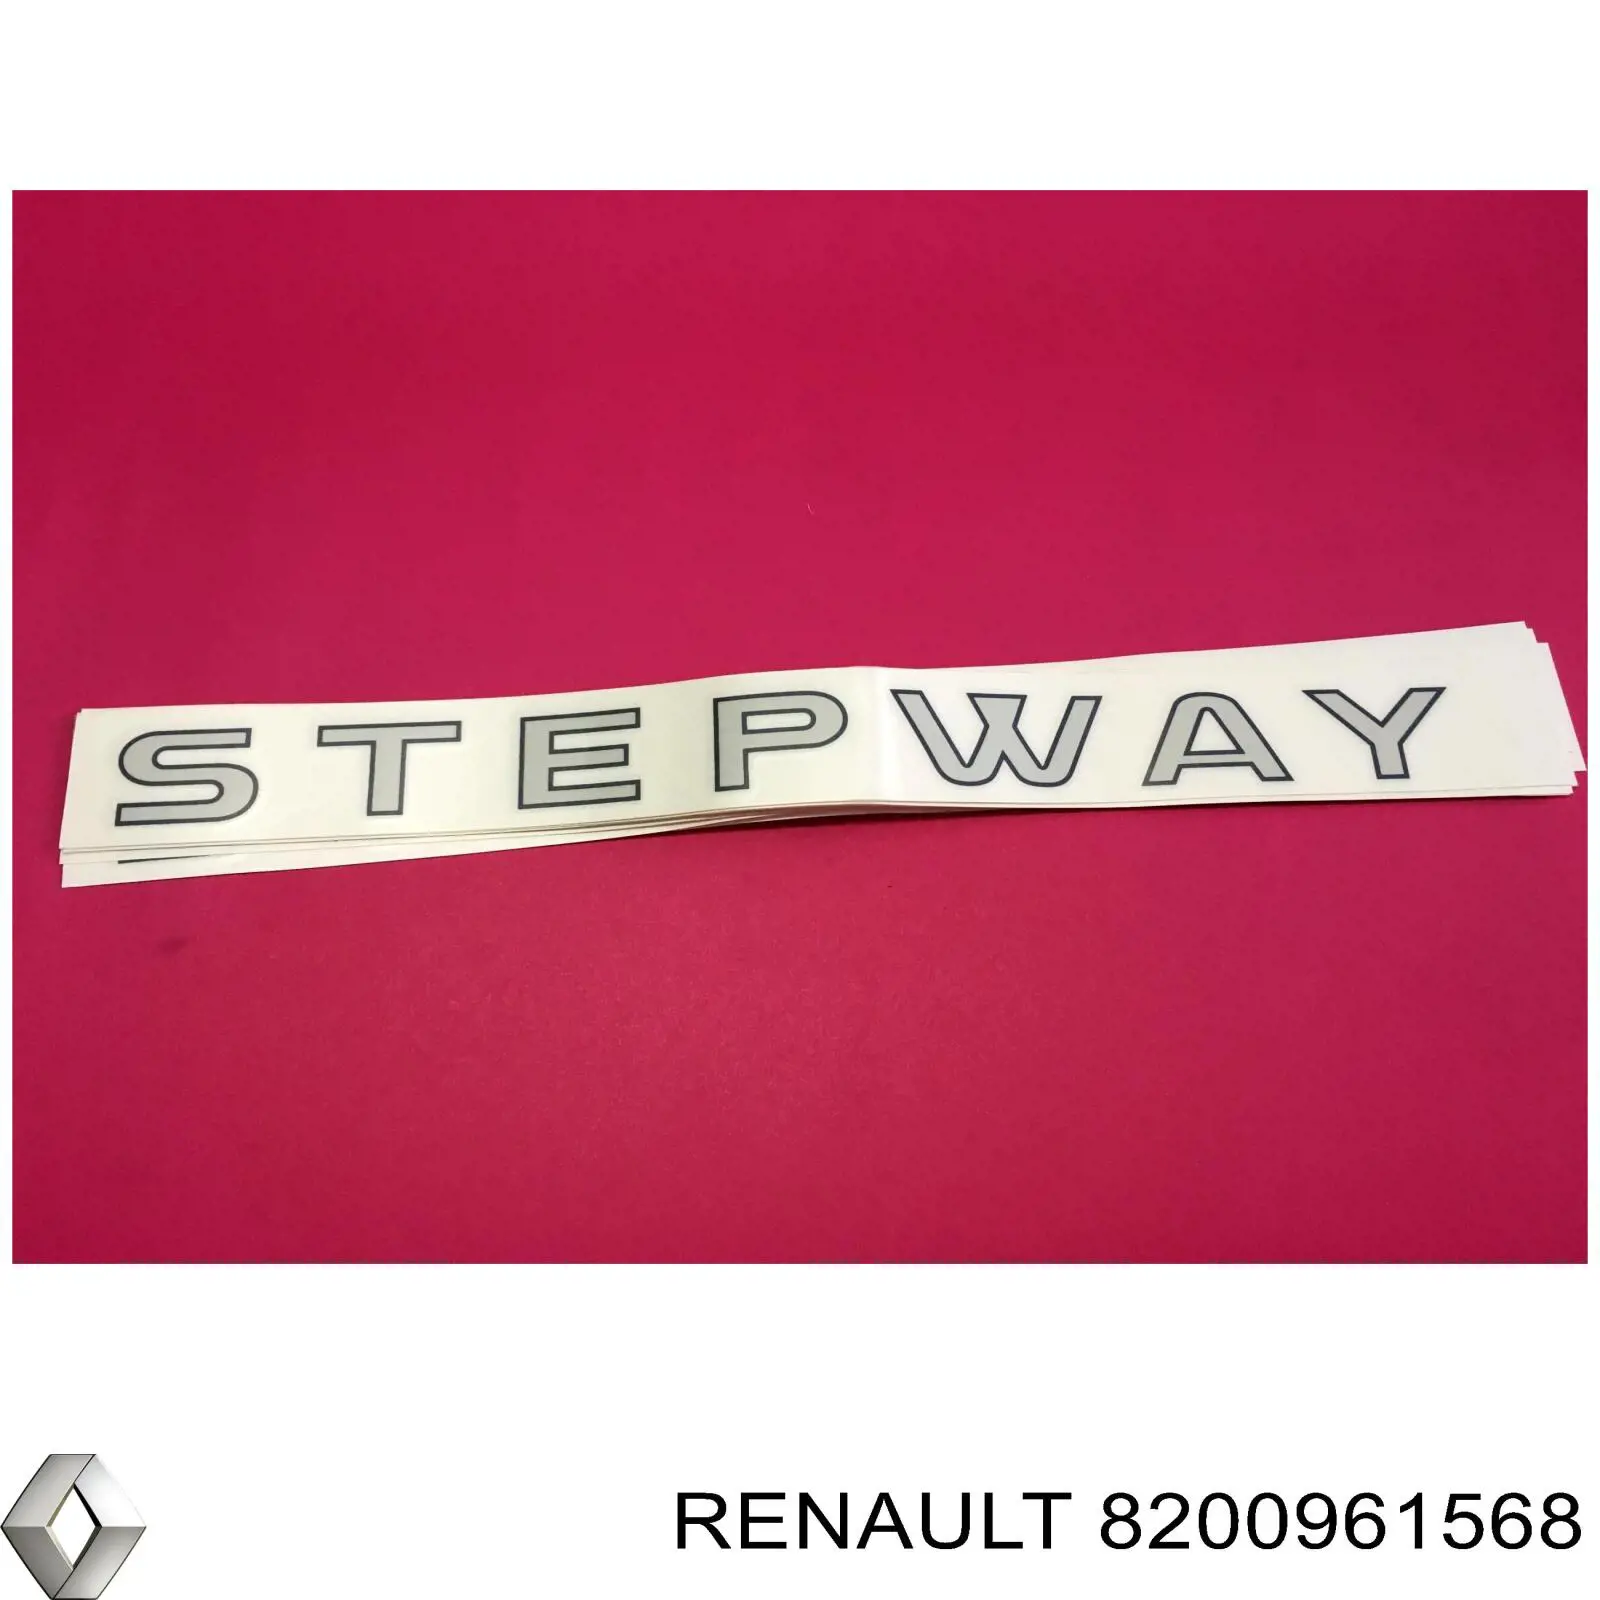 8200961568 Renault (RVI) pegatina para guardabarro delantero